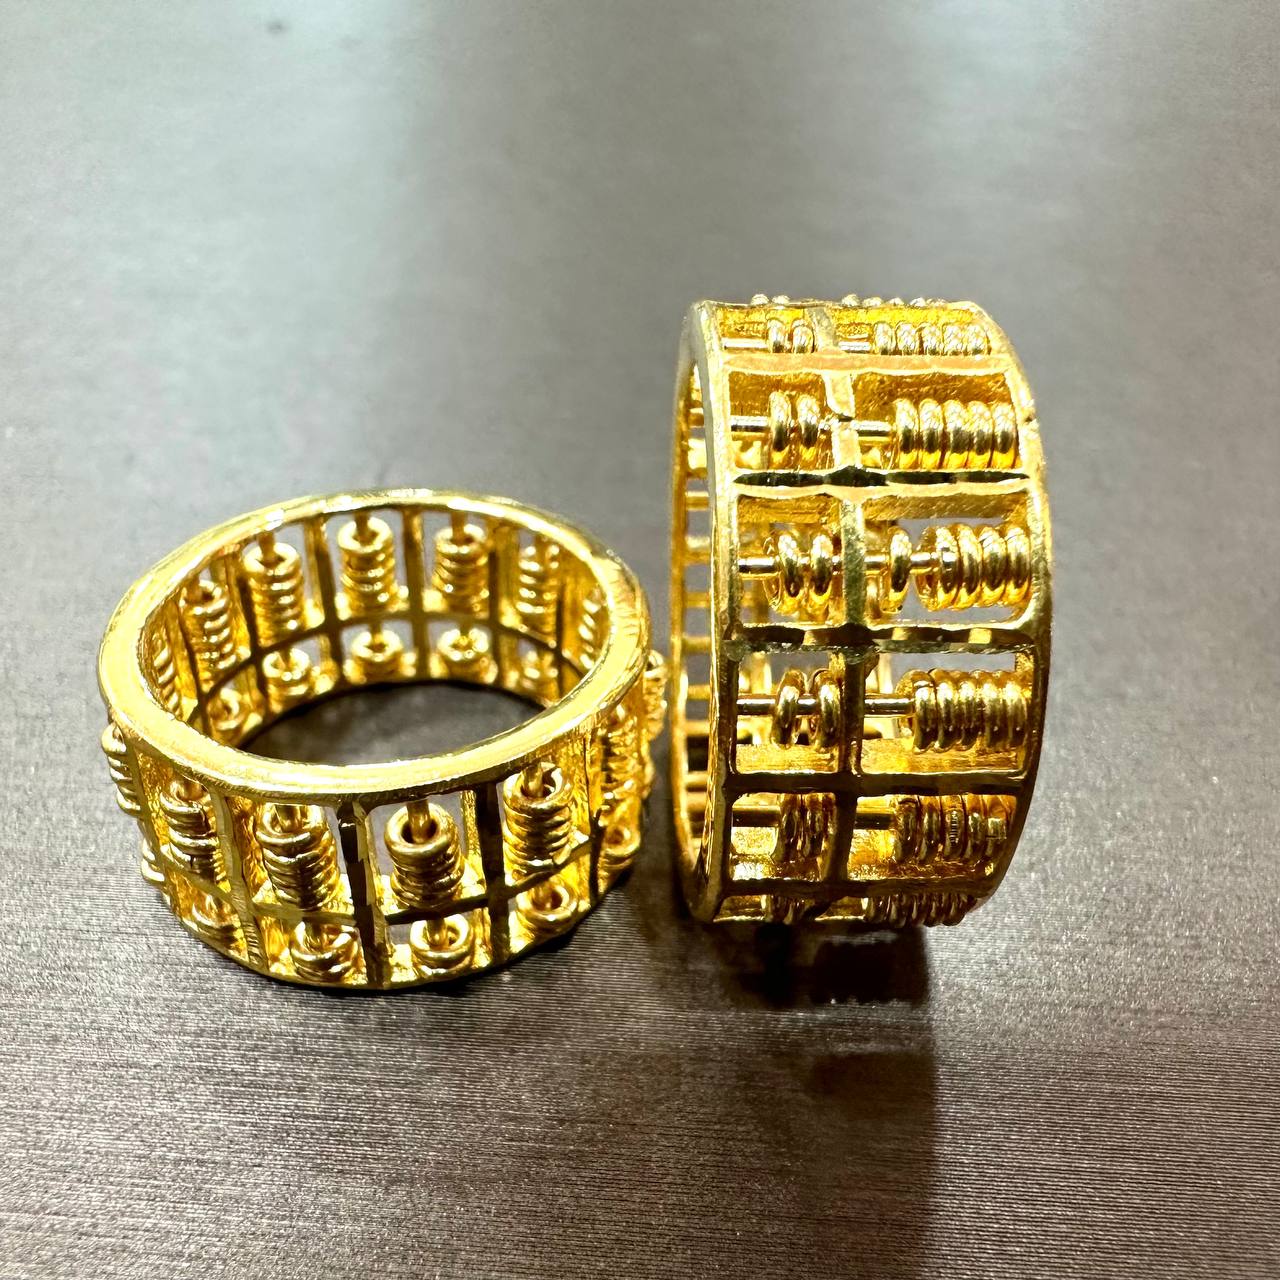 22k / 916 Gold Abacus Ring (Side Smooth Finish) V2-916 gold-Best Gold Shop